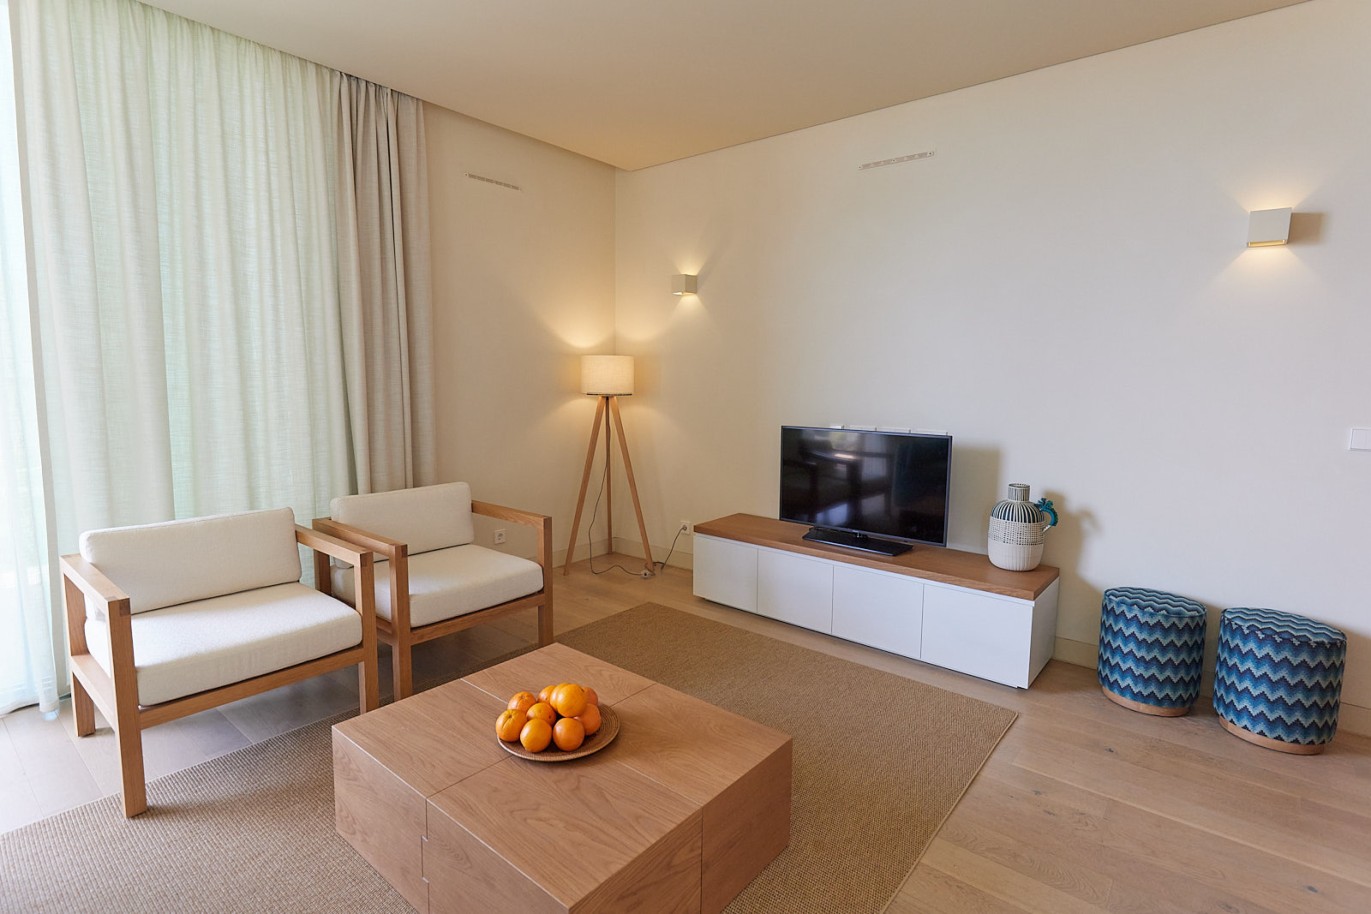 3 bedroom apartment in resort, for sale in Porches, Algarve_228607